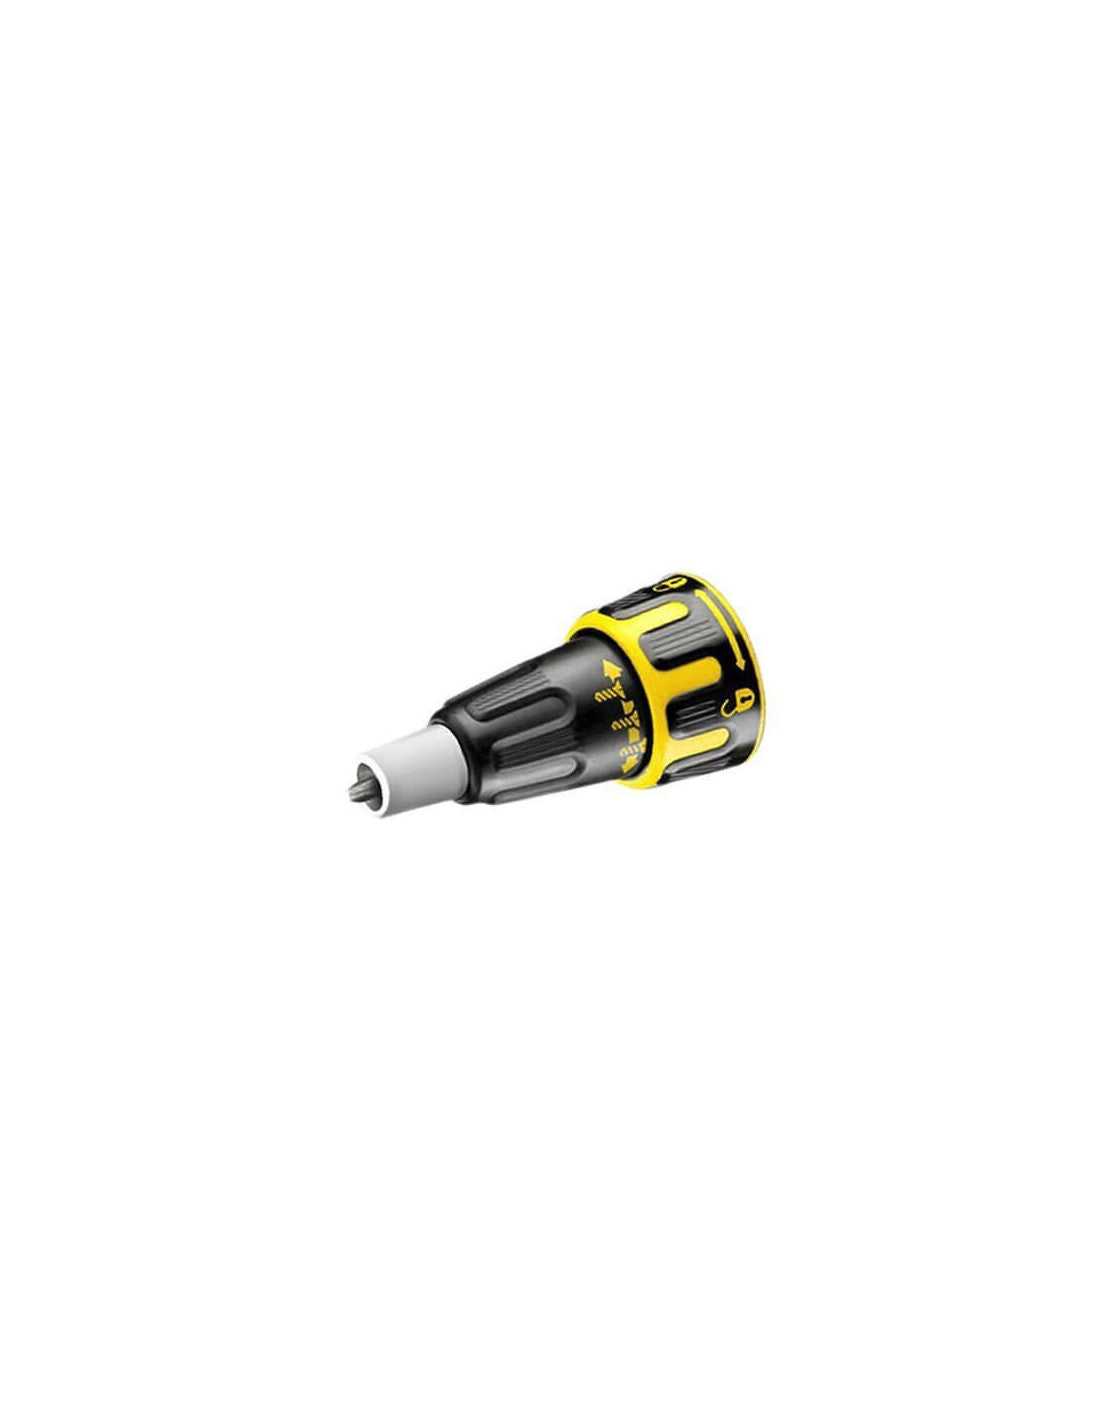 Plasterboard screwdriver Dewalt 18v 2 x 5.0 Ah battery with case + rapid screw charger DCF620P2K